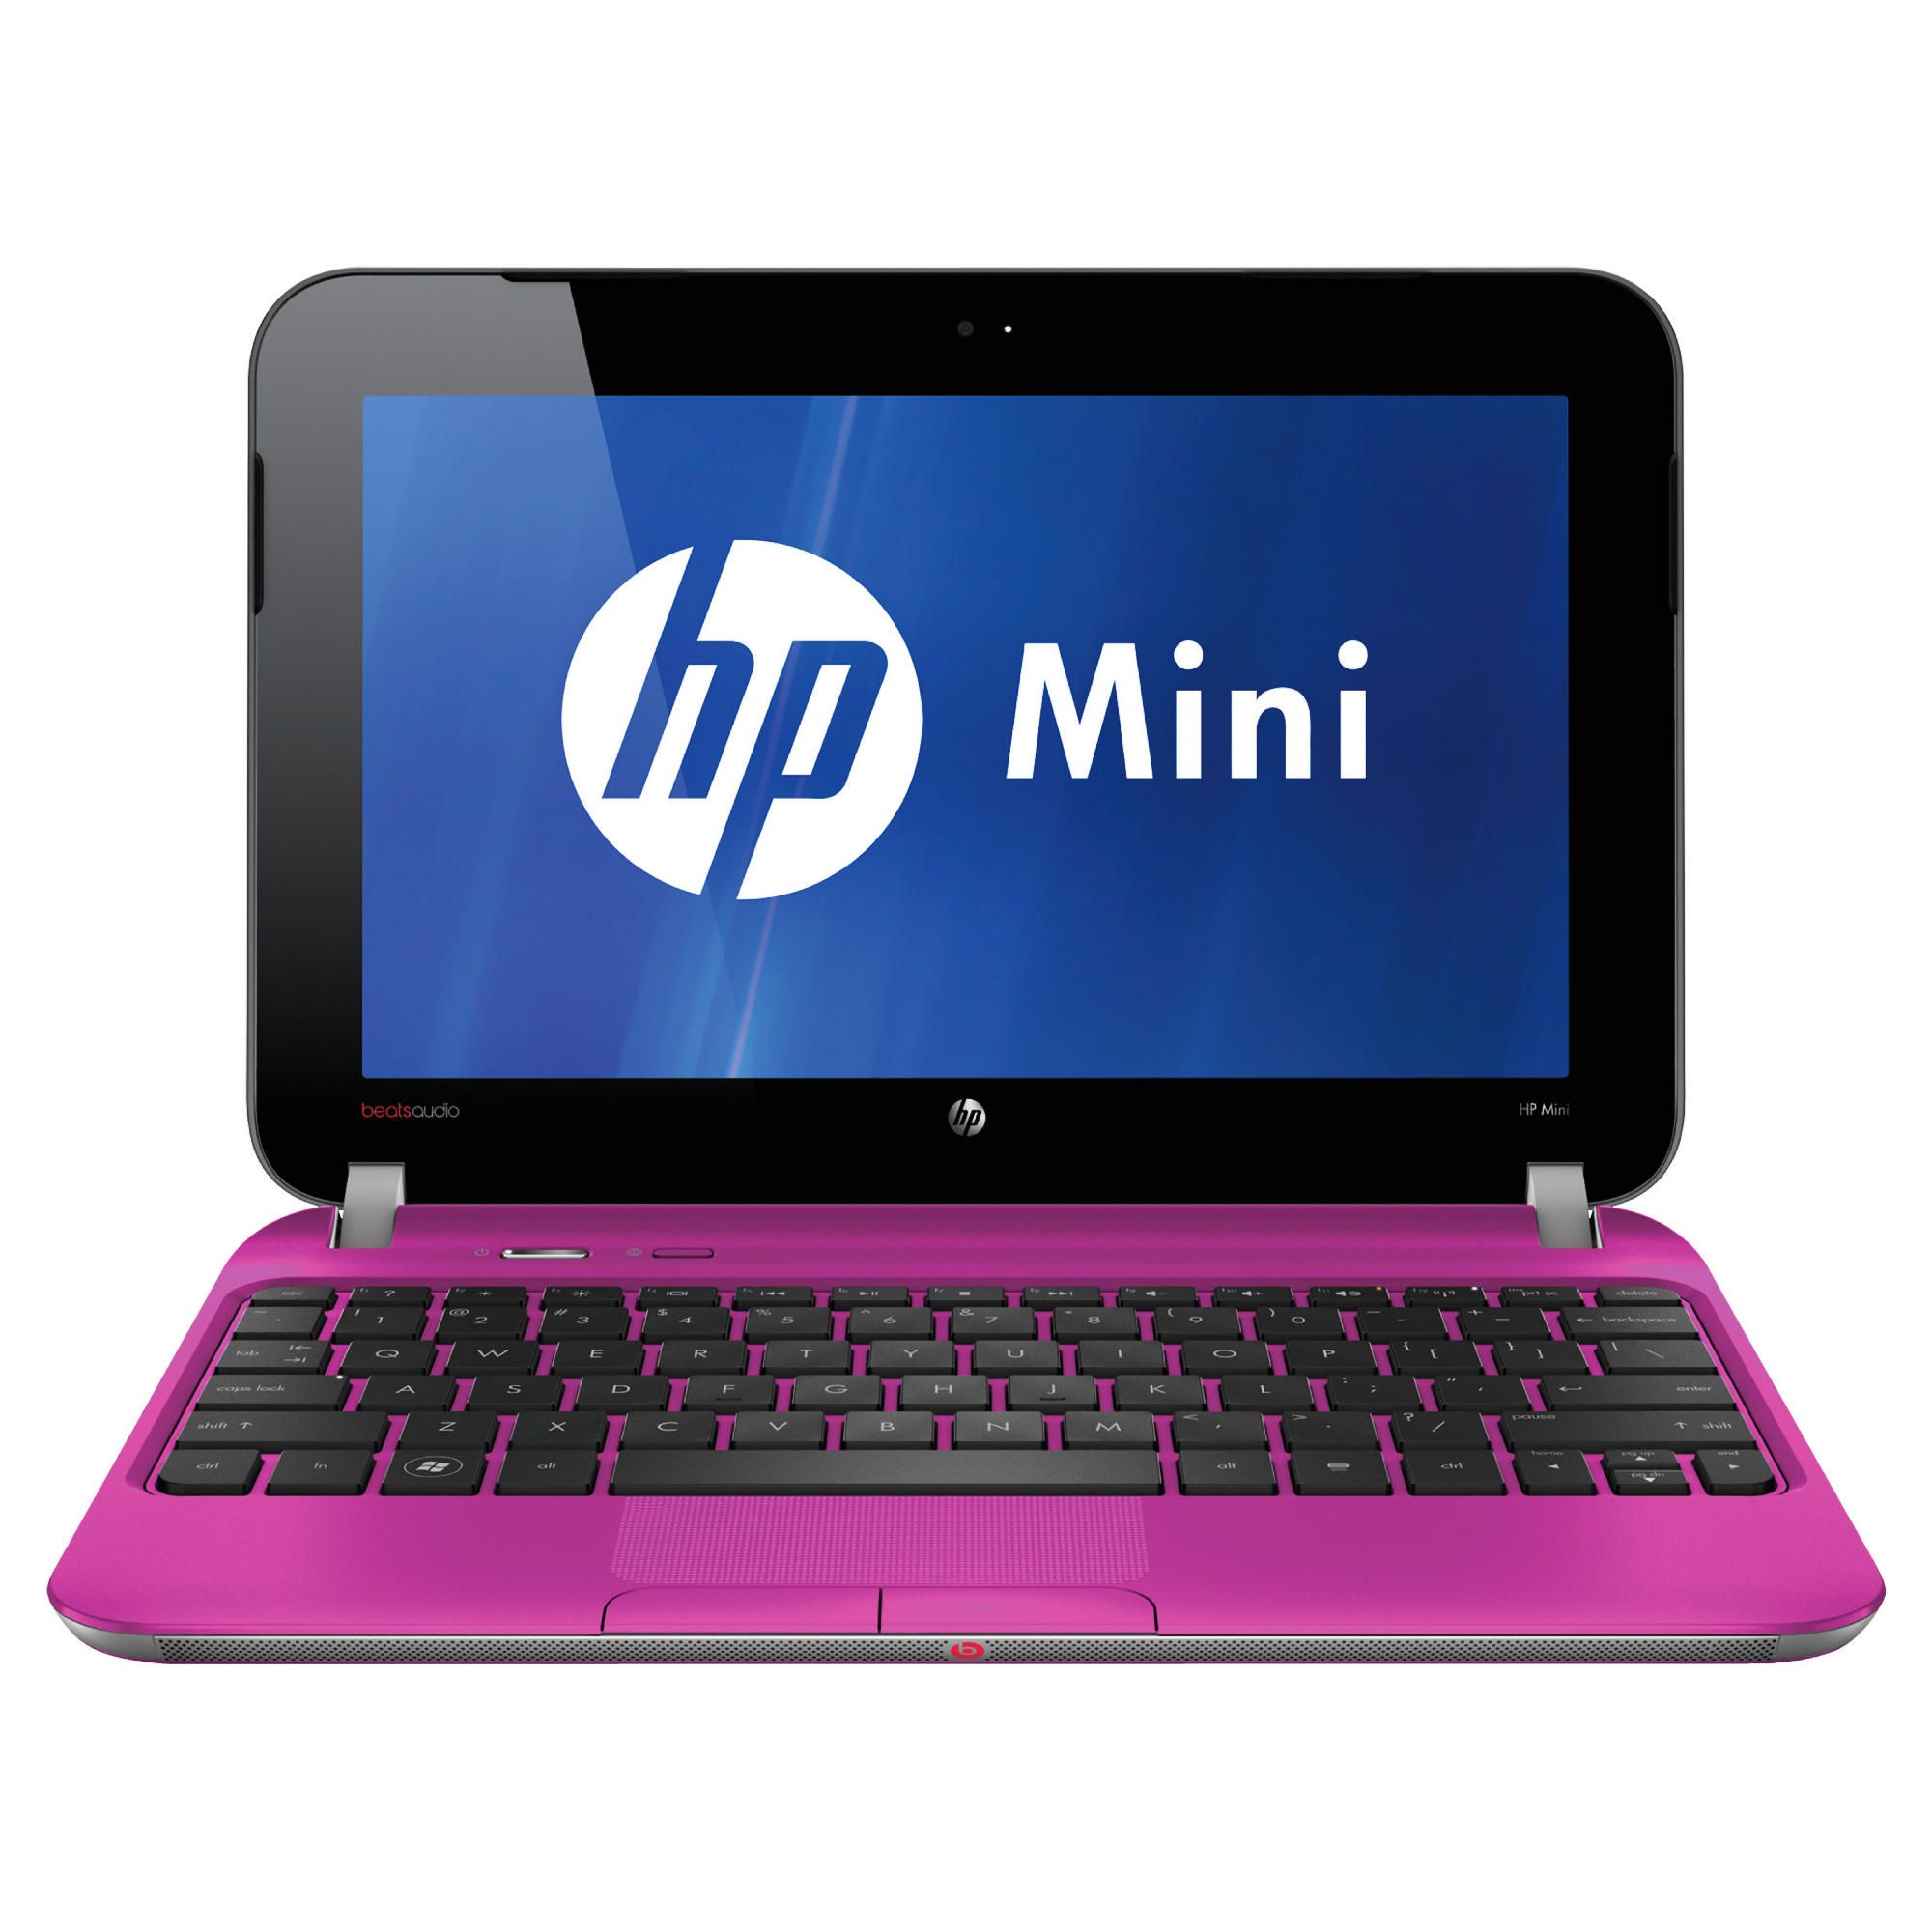 HP Mini 210-4122 Netbook (Intel Atom, 1GB, 320GB, 10.1'' Display) Pink at Tesco Direct